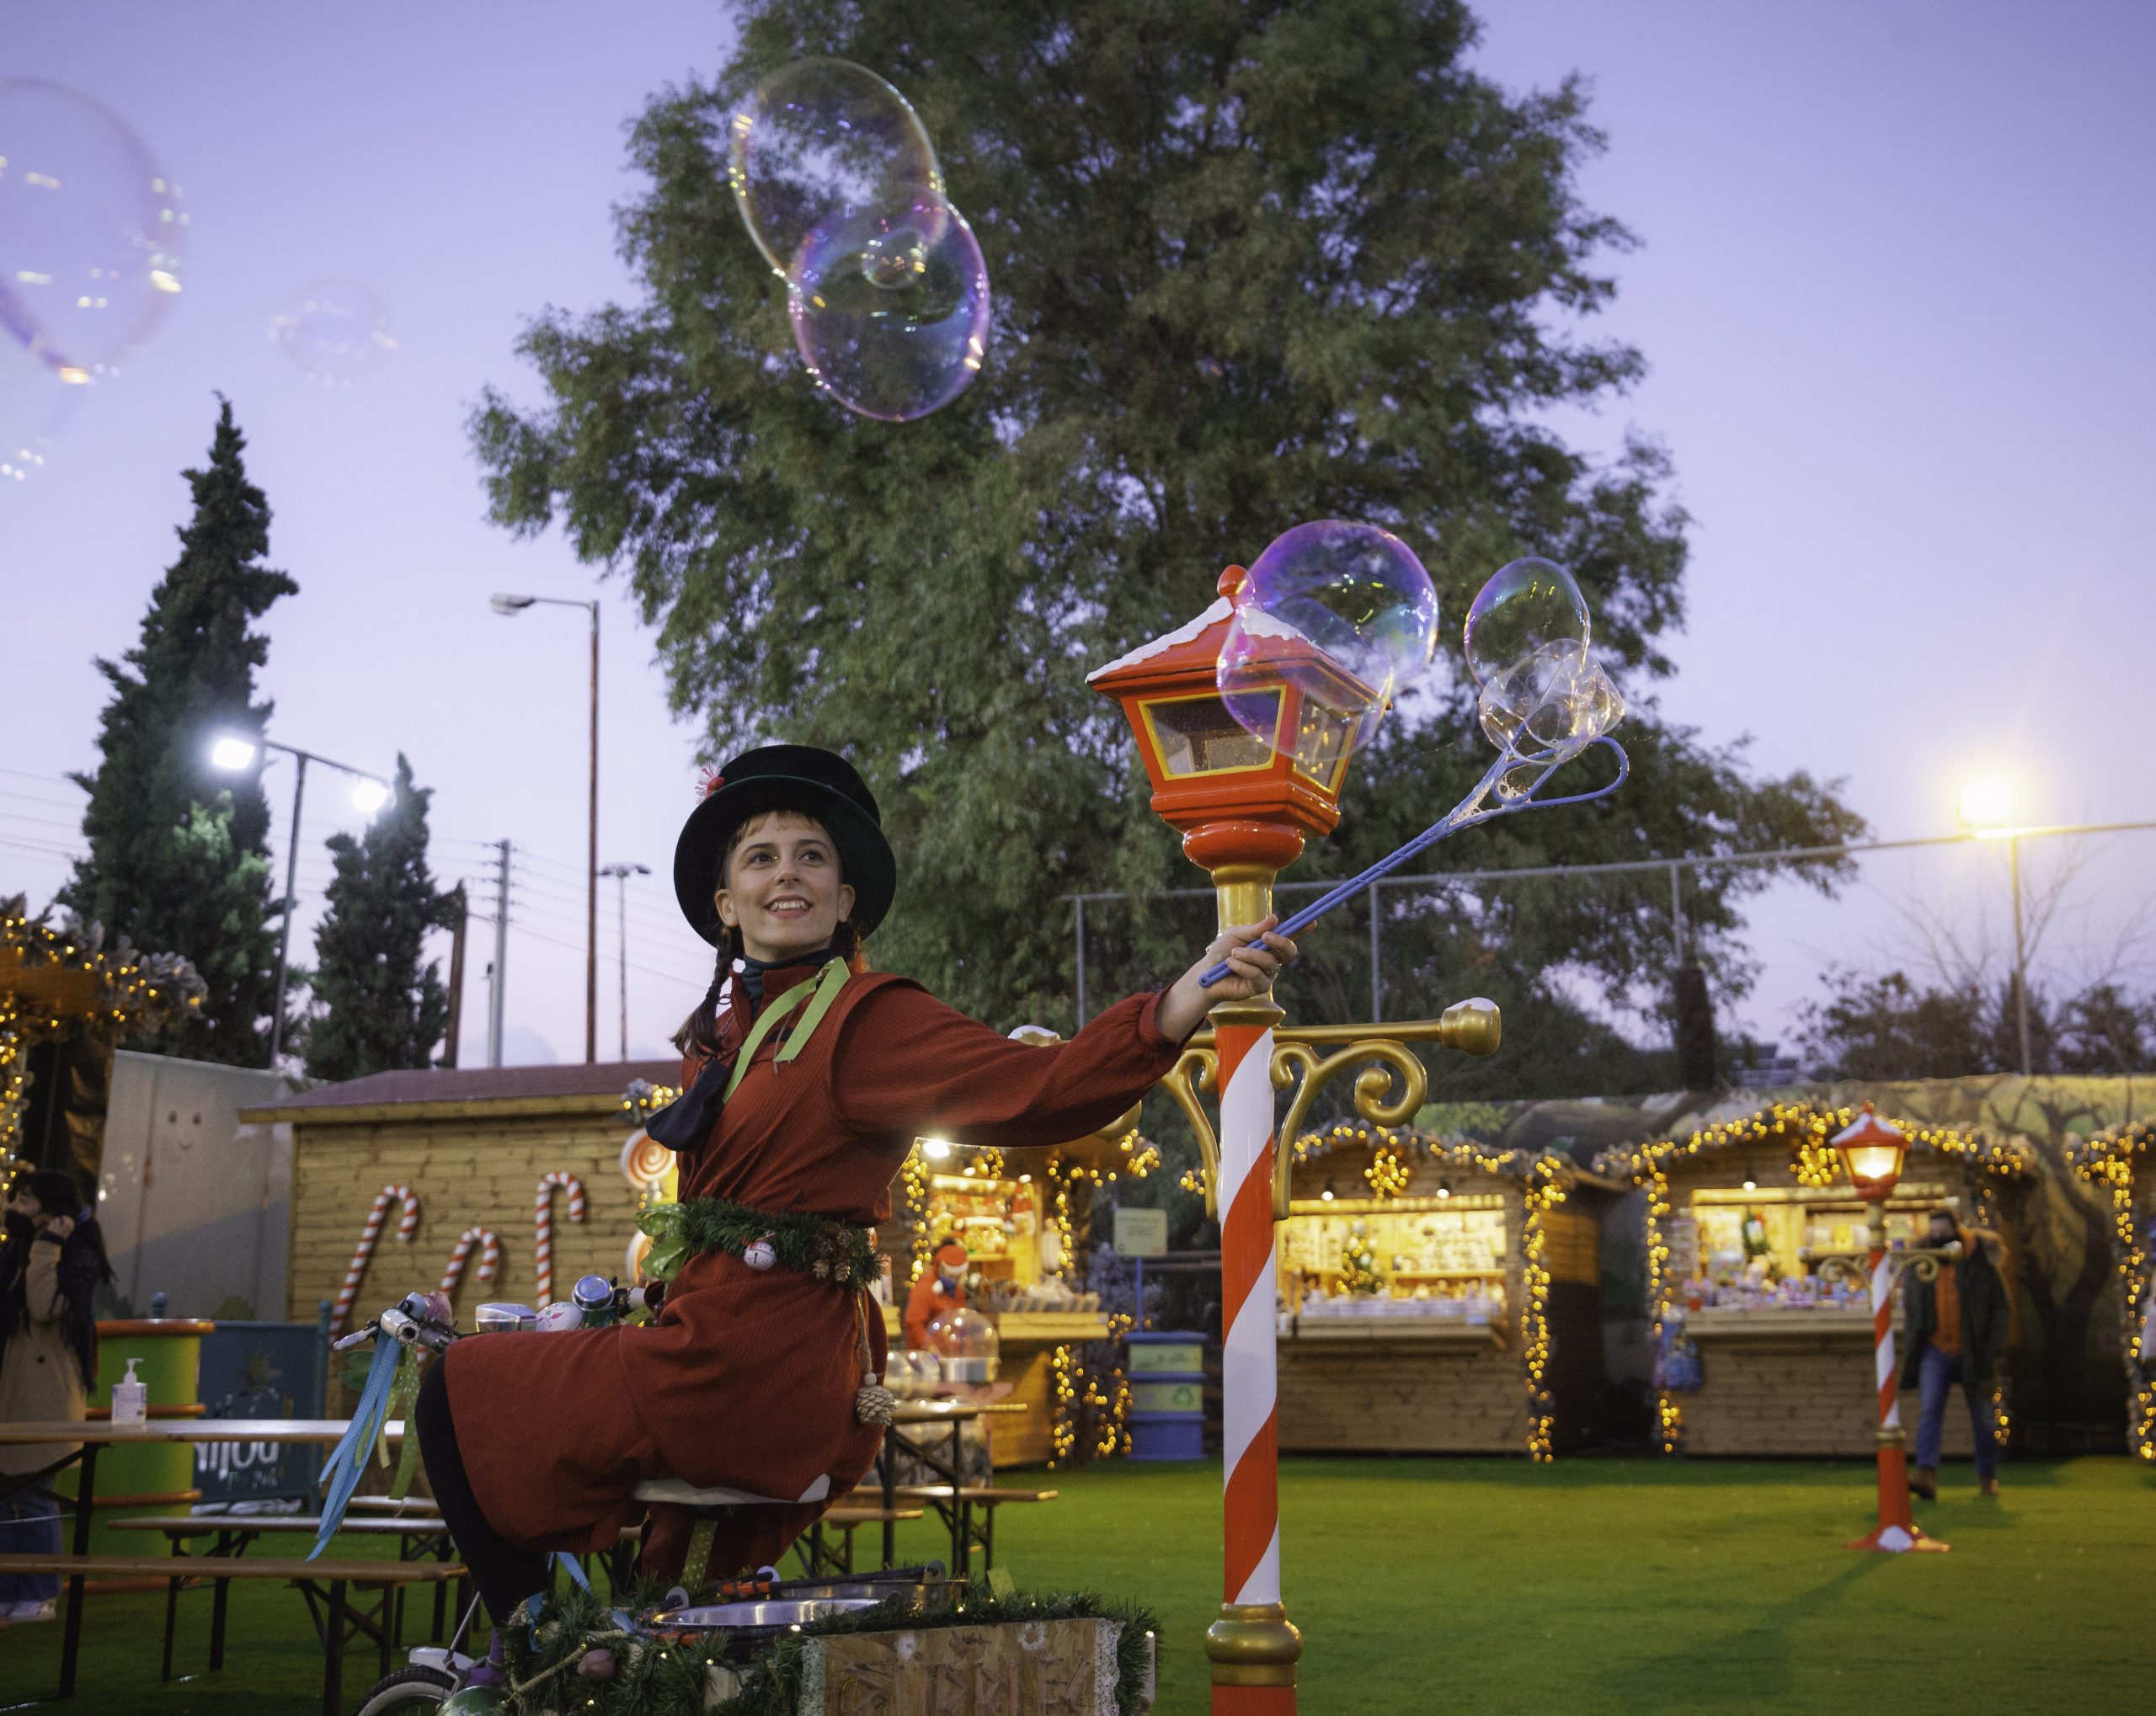 Fabrica Athens: Χριστούγεννα με μαγικά bubble shows και uεάματα από την ομάδα Mr and Mrs Bubble